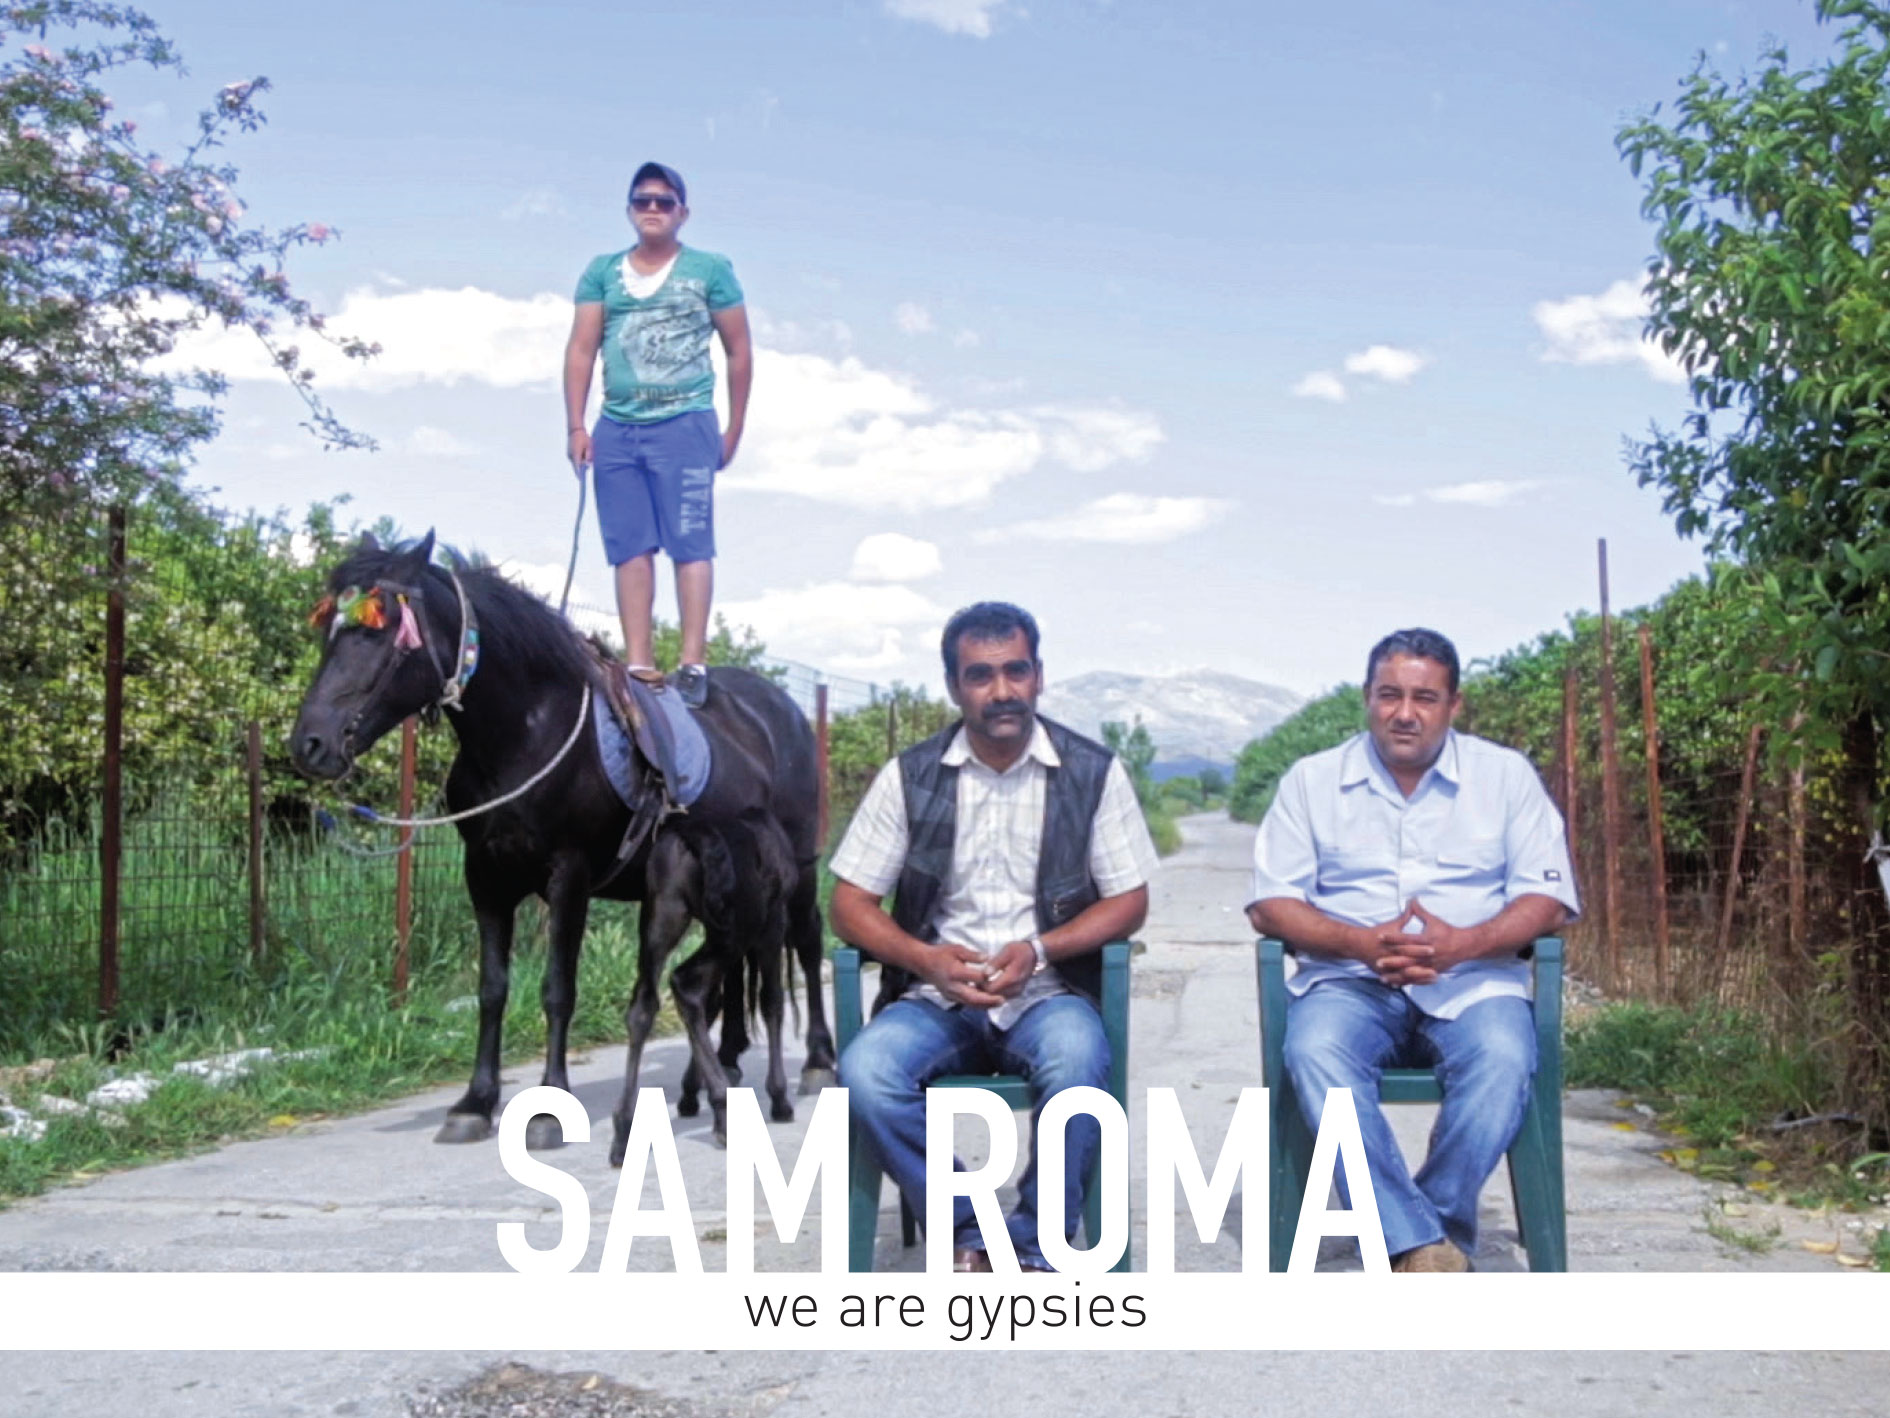 “Sam Roma- Είμαστε τσιγγάνοι”: Μια ταινία της Μαρίνας Δανέζη για την καθημερινότητα των  Ρομά  στο Onassis Channel στο Youtube (trailer)